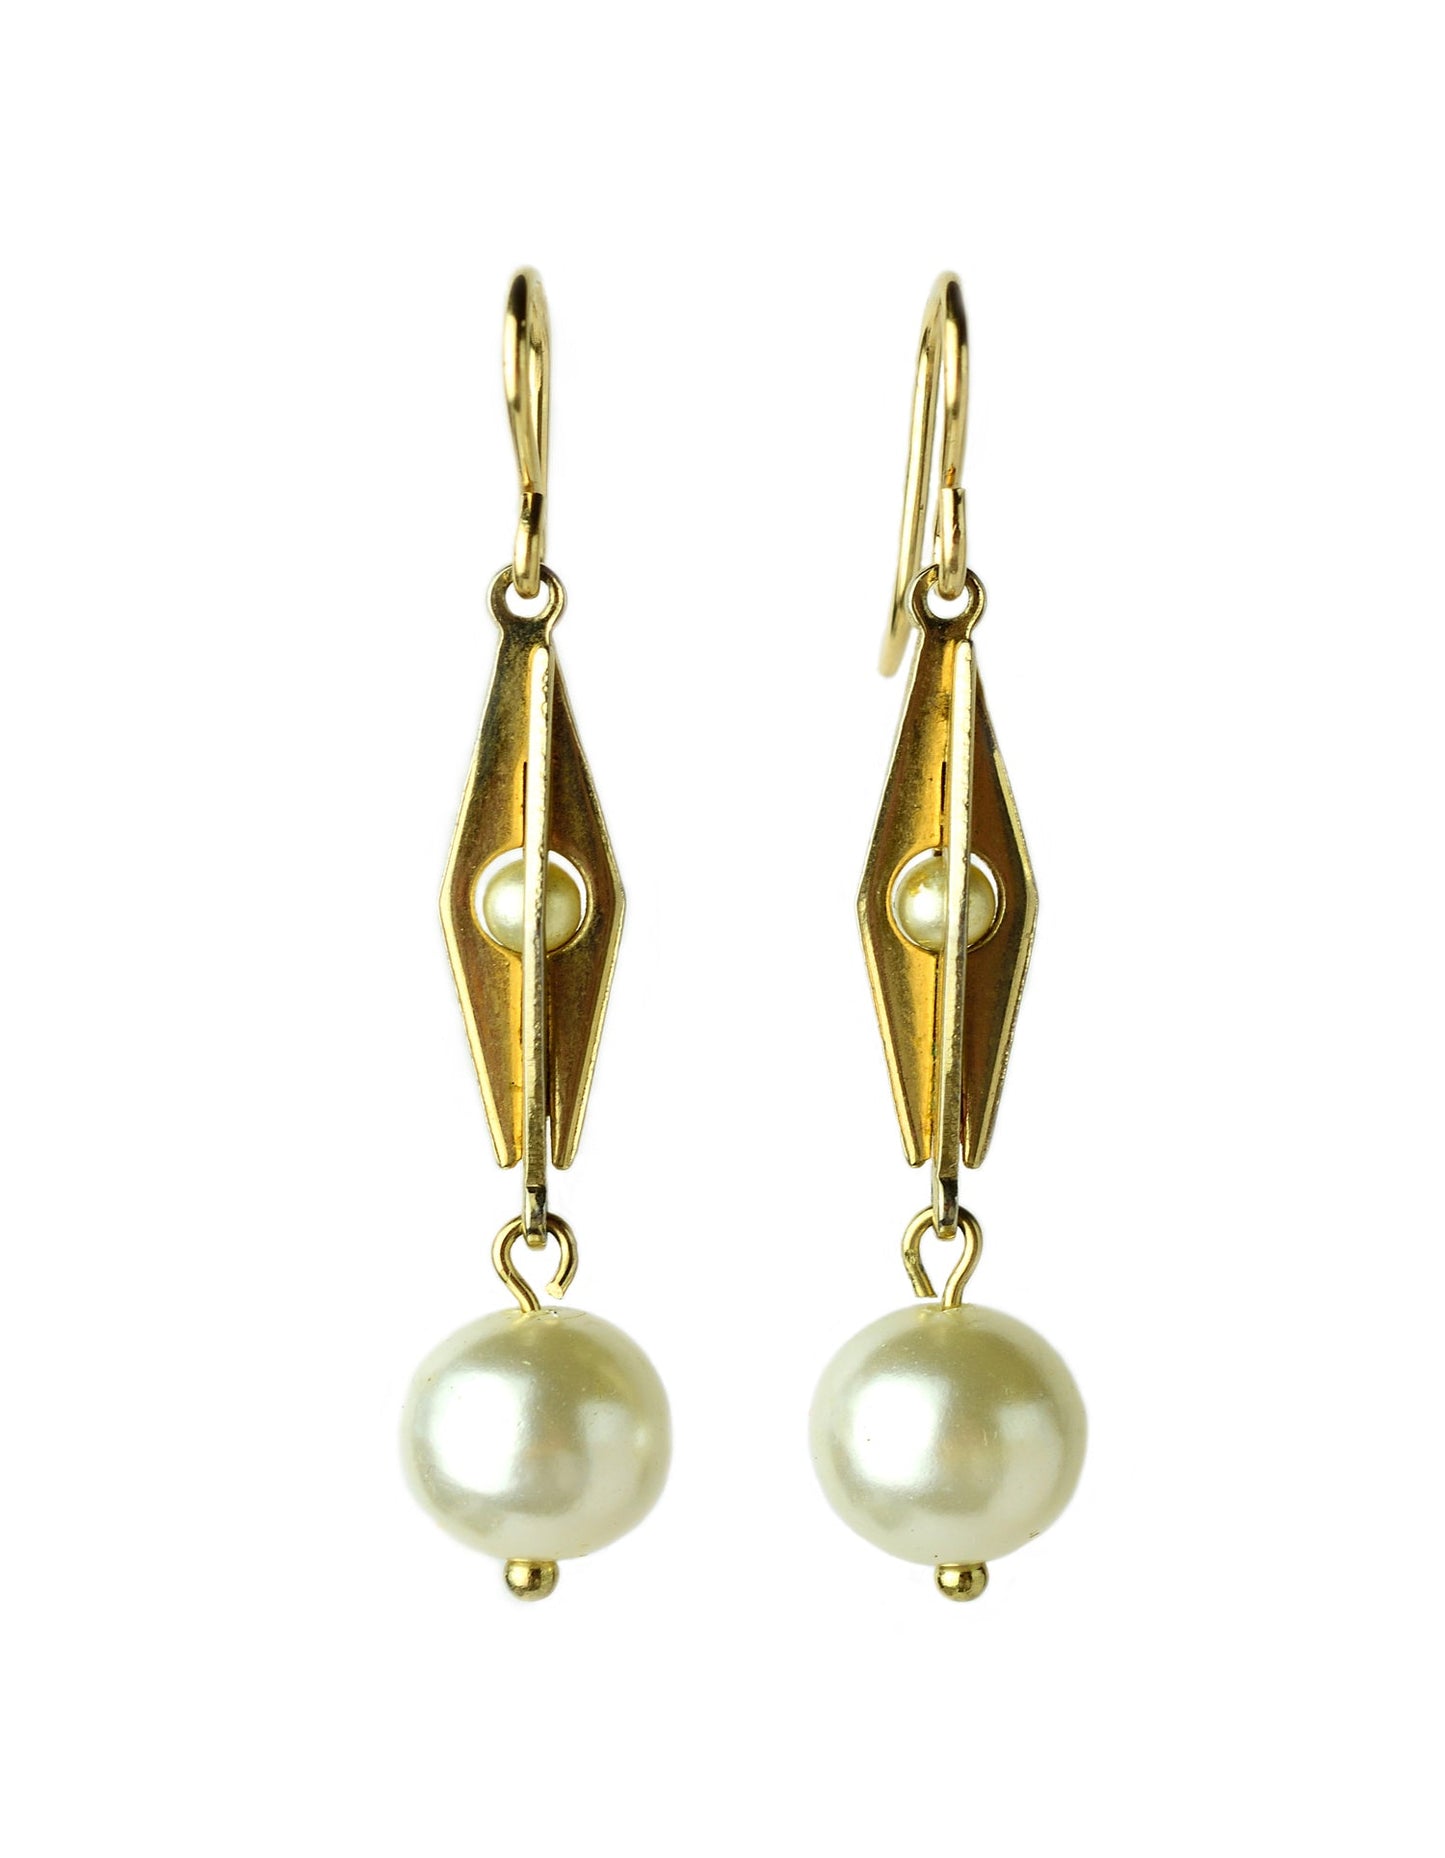 onujewelry.com - Tinkerbell earrings by Donna Silvestri, On U Jewelry, Richmond, VA